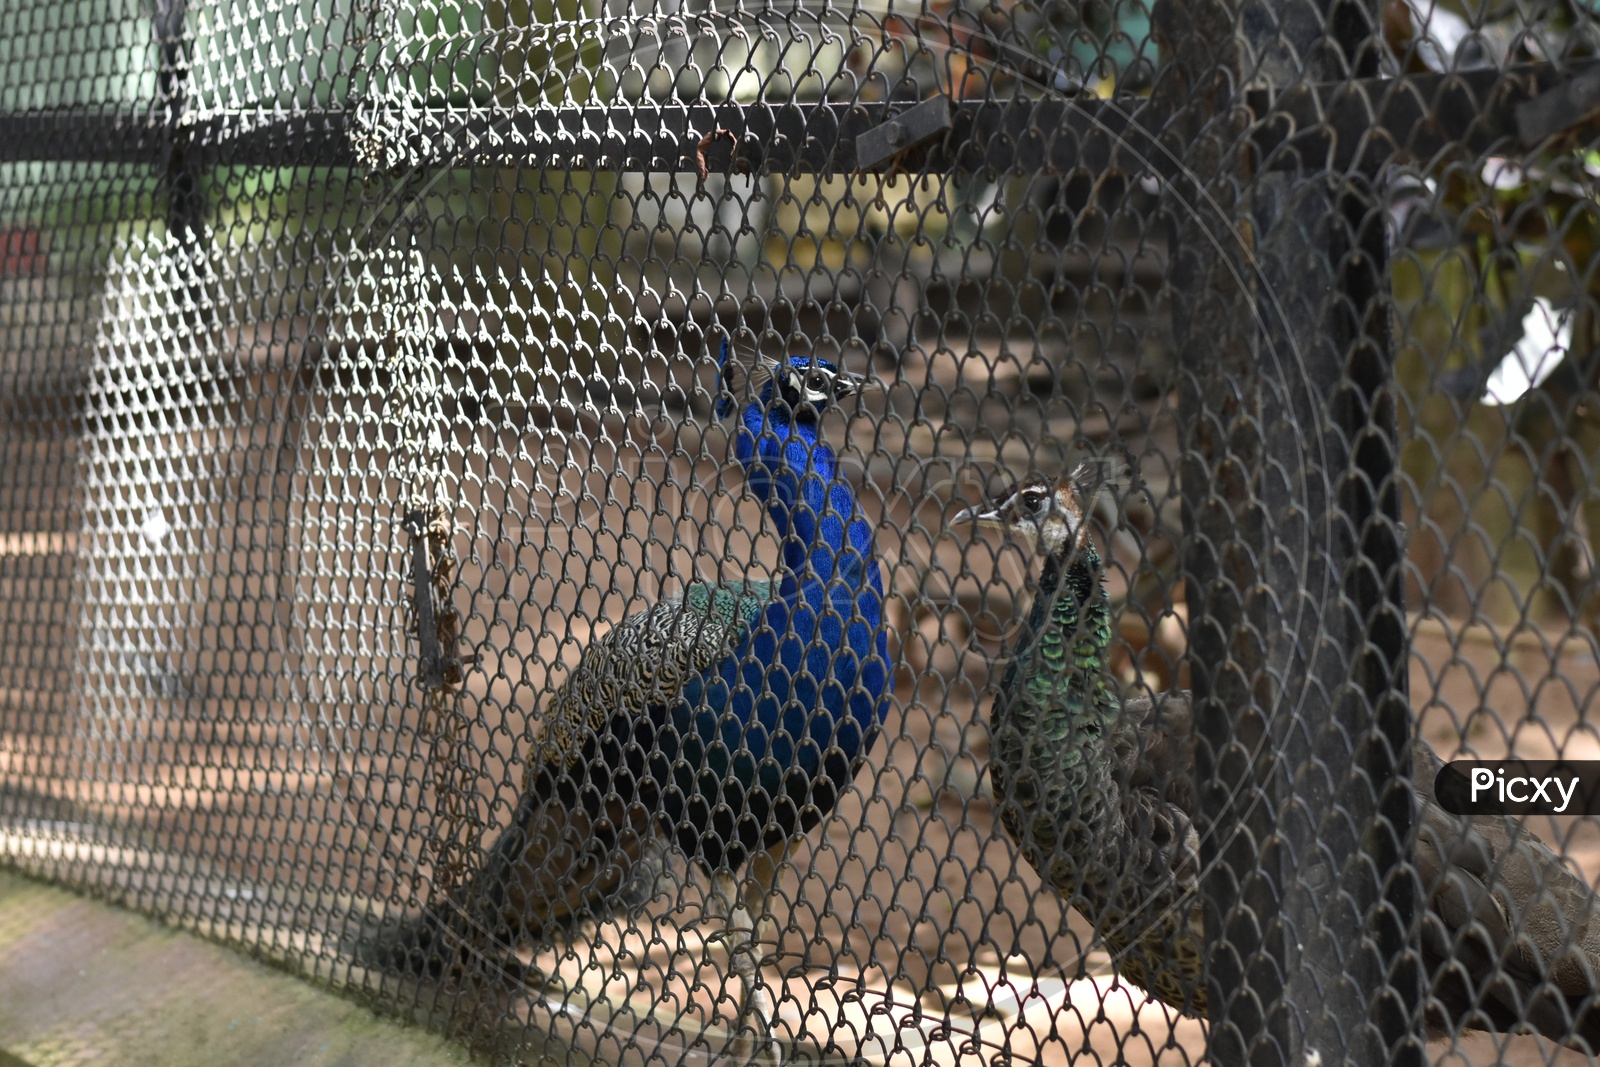 Indian National Bird Peacock behind fencing Bars in Zoo